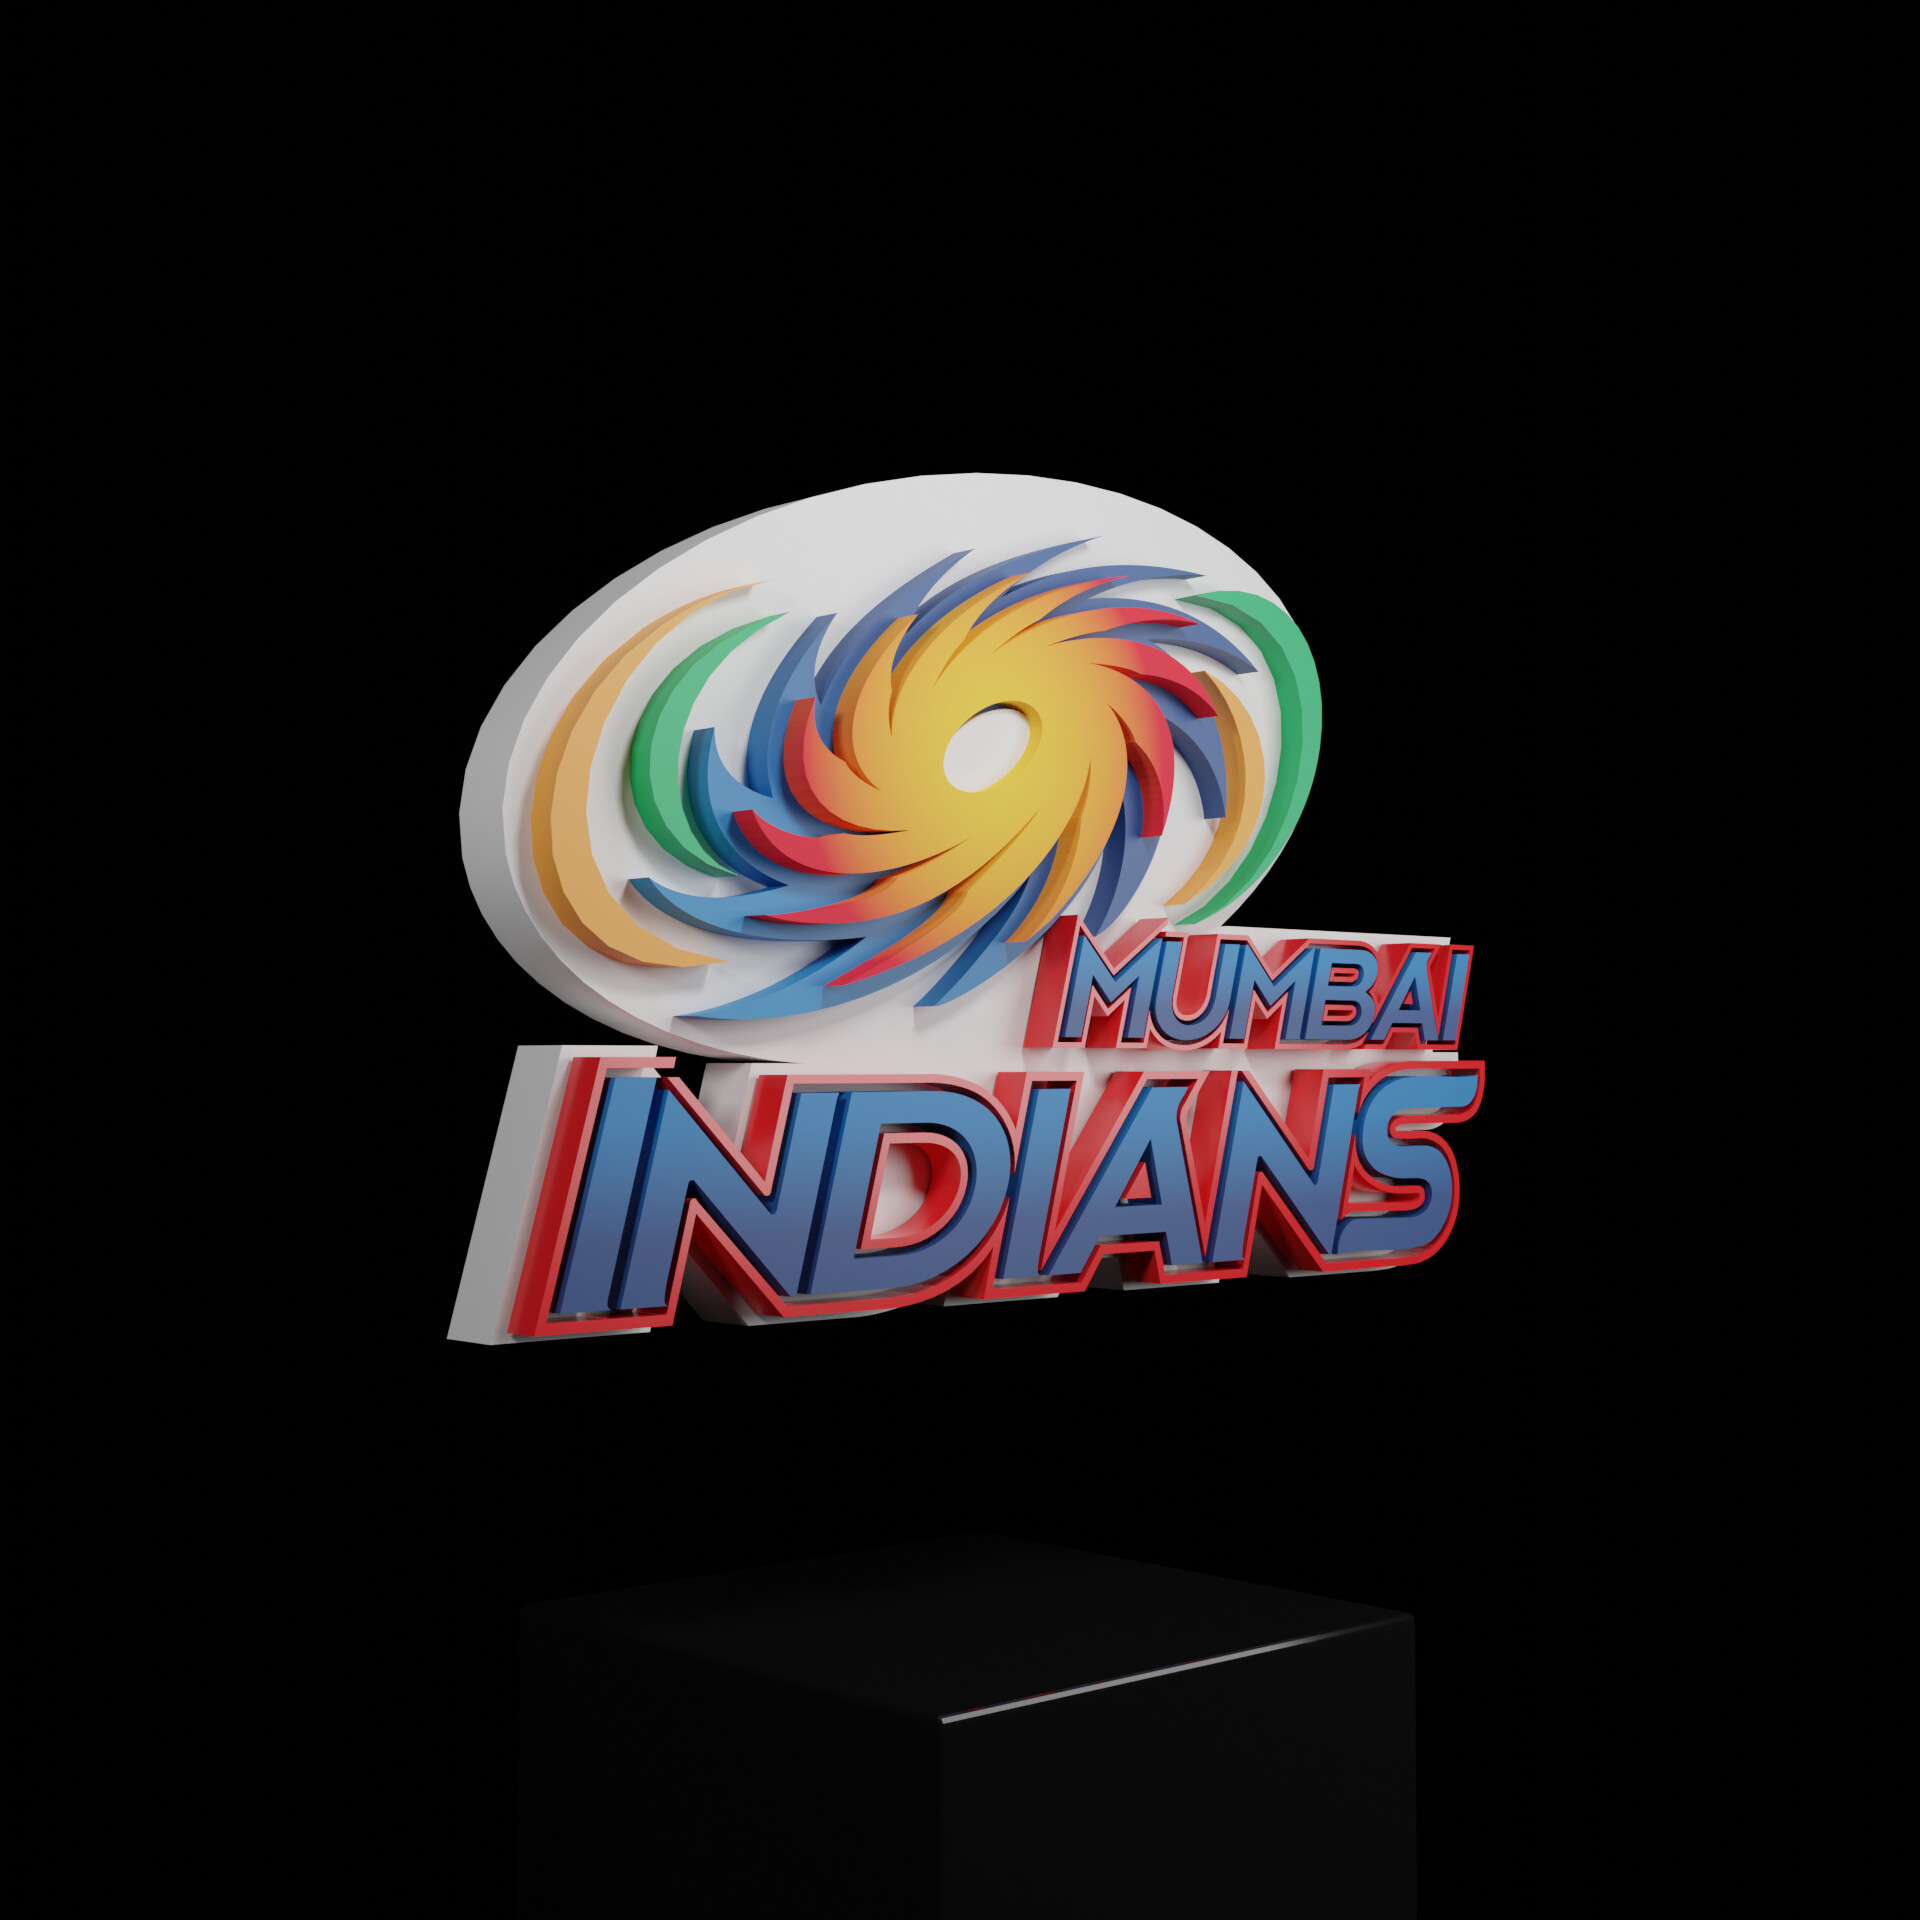 Afterglow Back Cover for I PHONE 11 Pro Max CRICKET, IPL, IPL LOGO, MI LOGO,  MUMBAI INDIANS - Afterglow : Flipkart.com